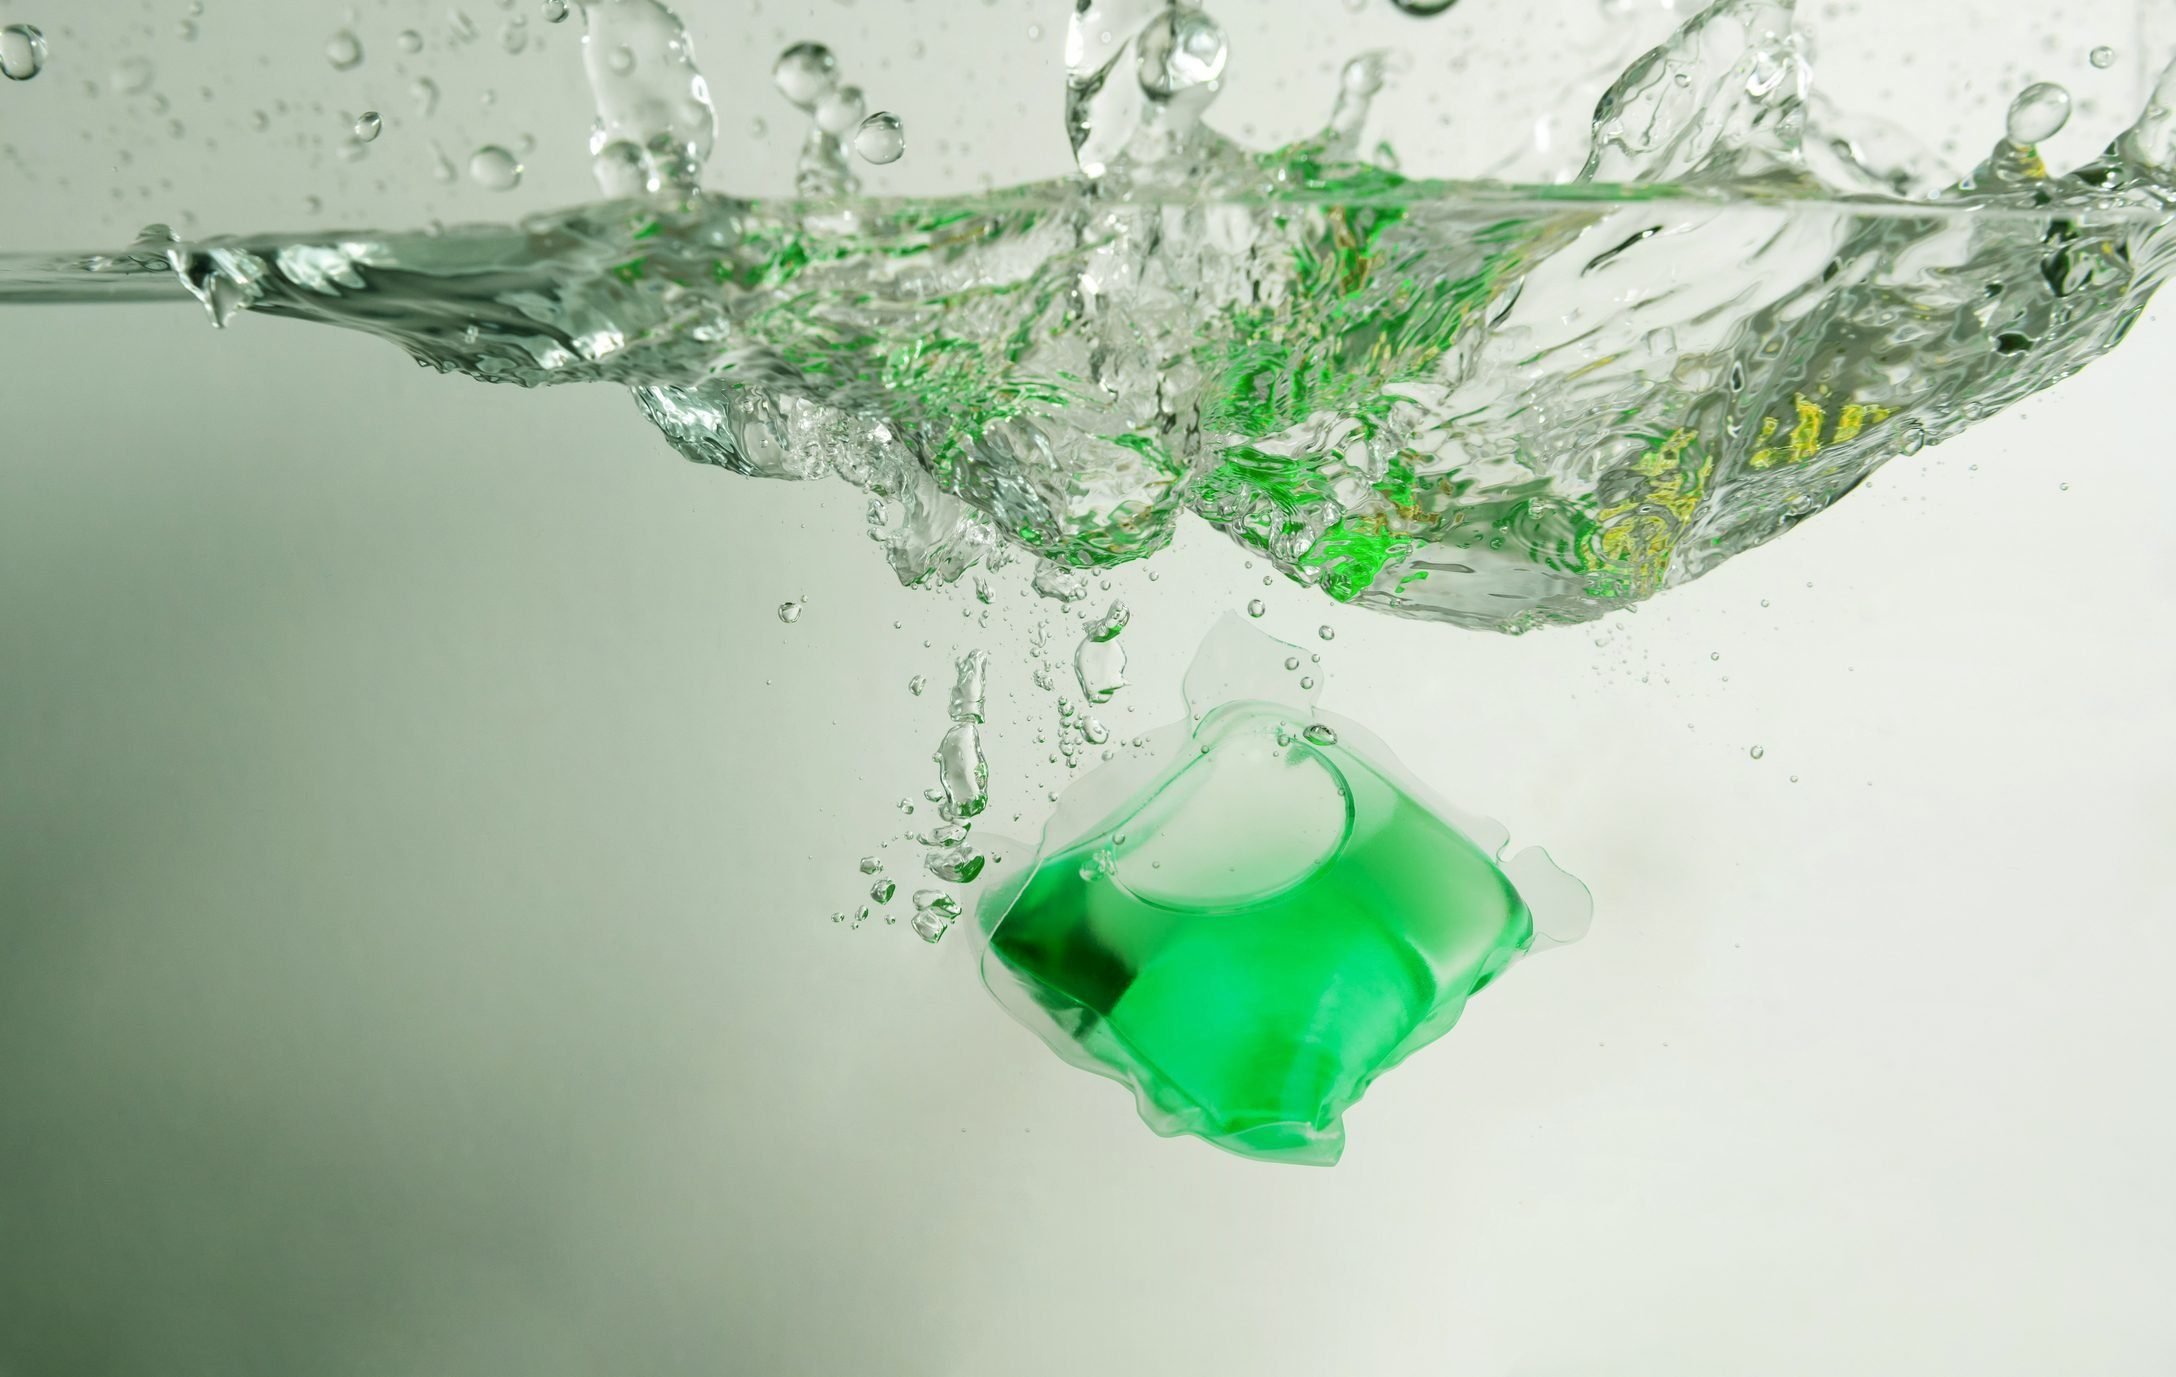 green laundry pod splashing into water